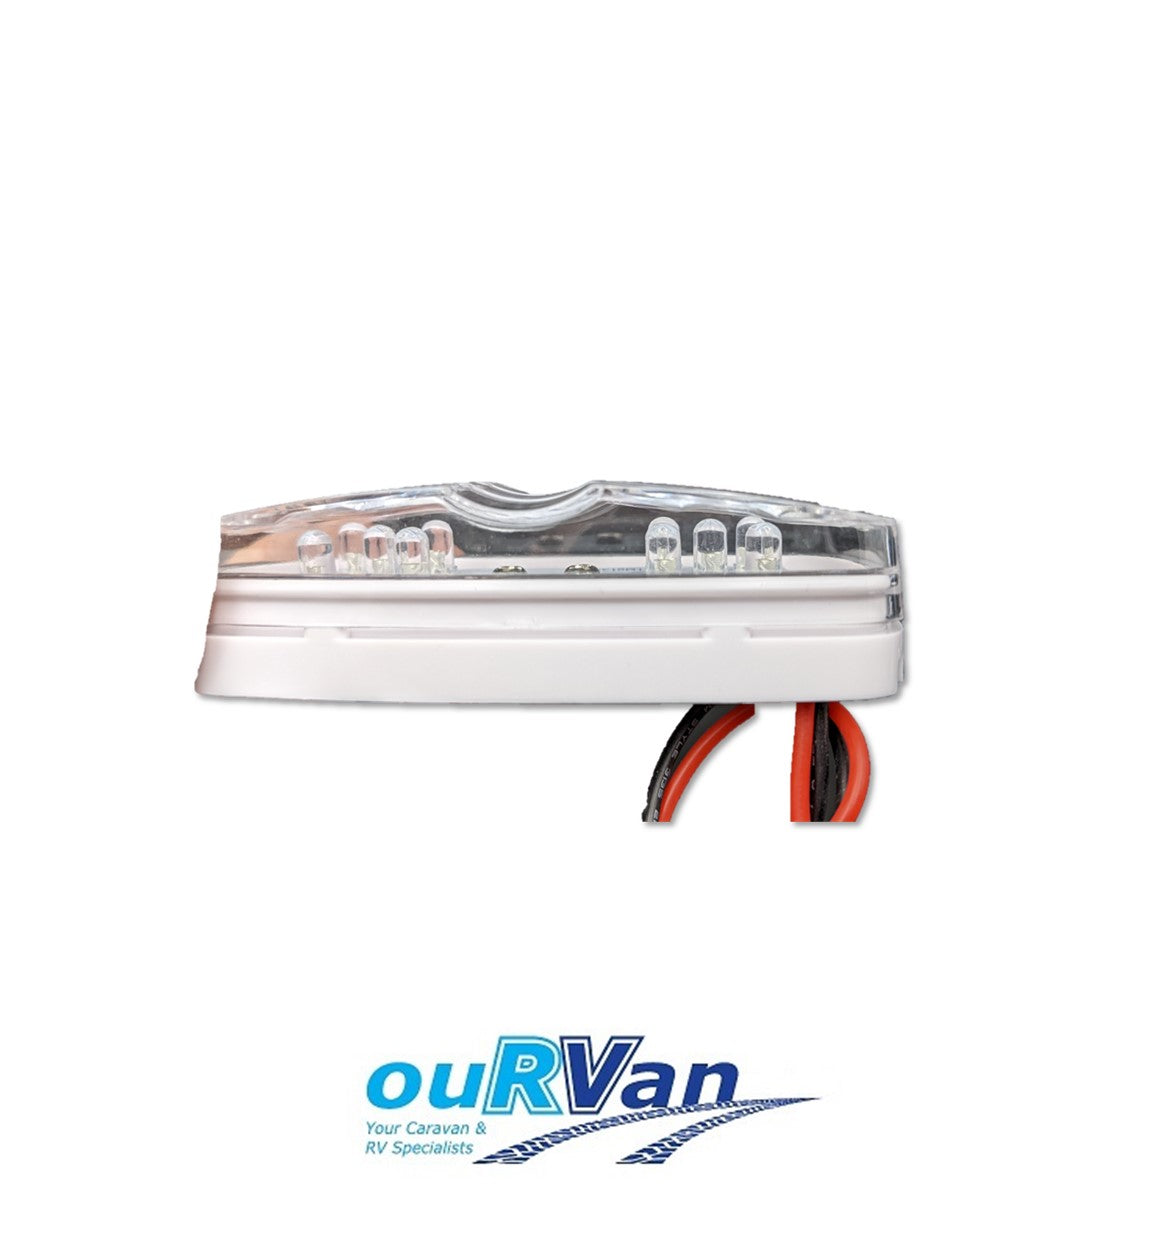 NEW LED 86310 Replacement Front End Outline Lamp Light Caravan Camper RV00035